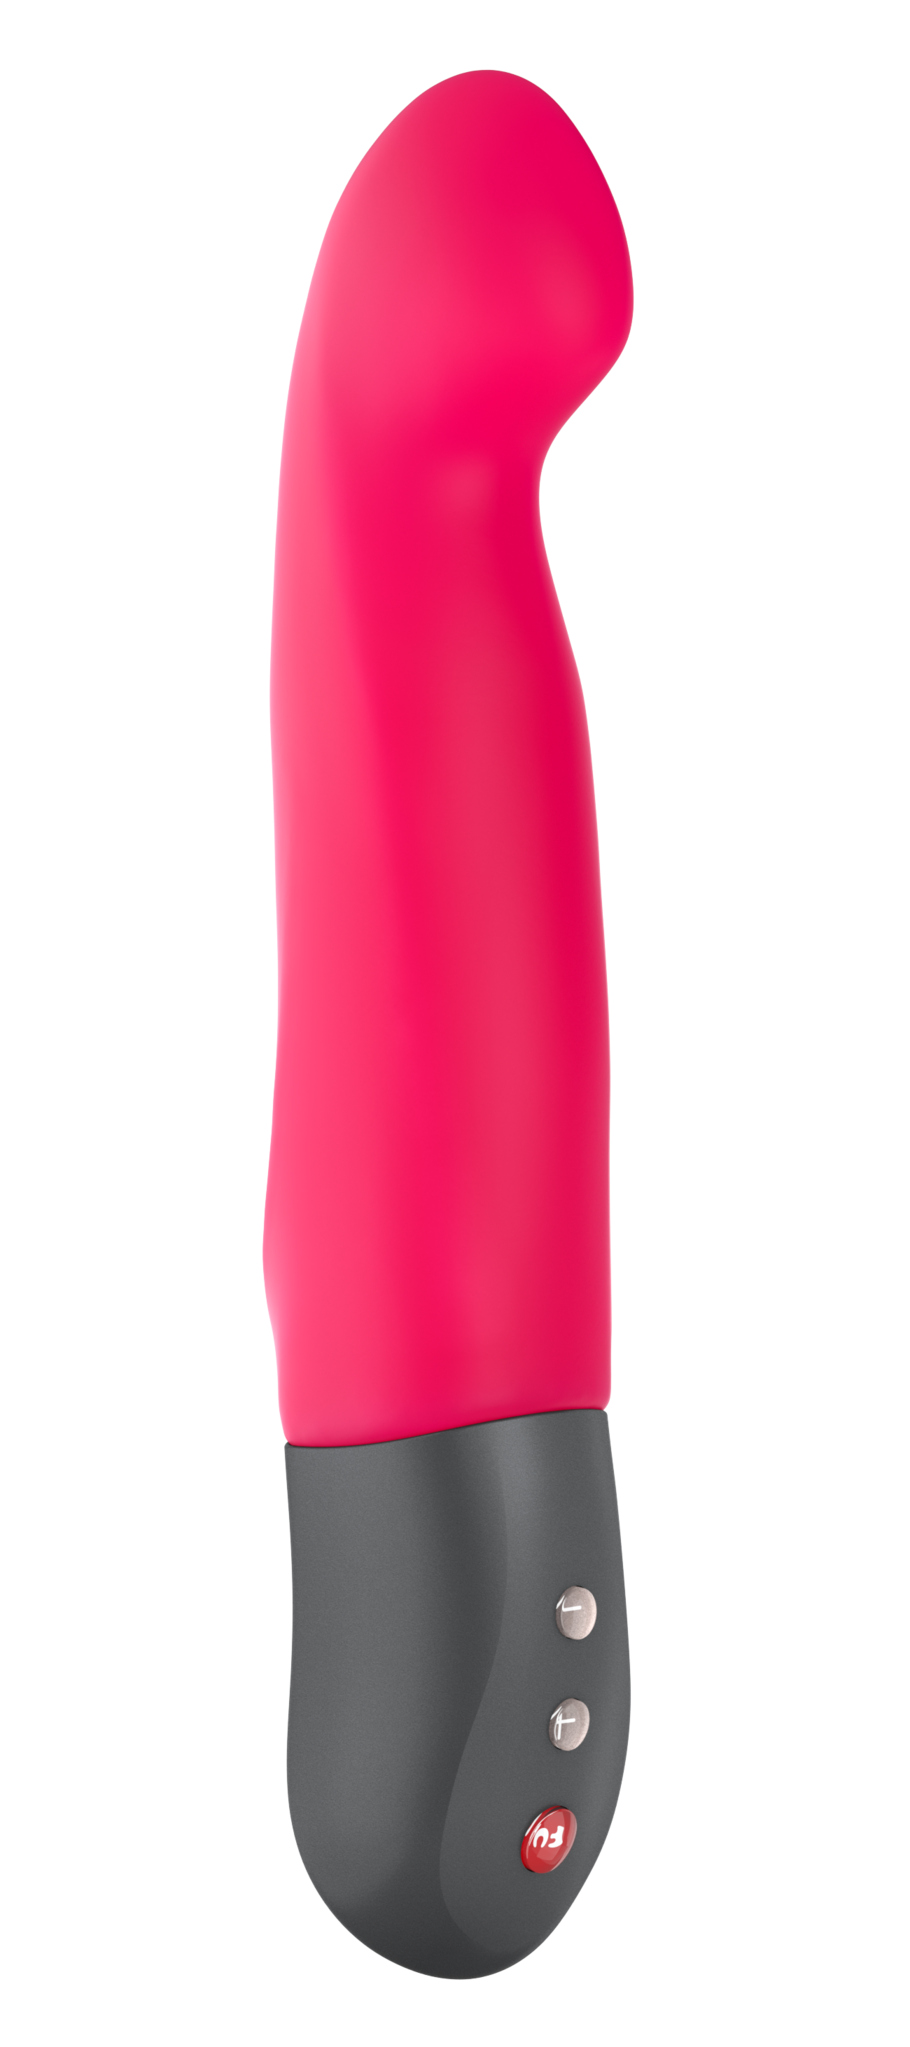 Fun Factory Stronic G pulsator - krachtig stotende toy Roze